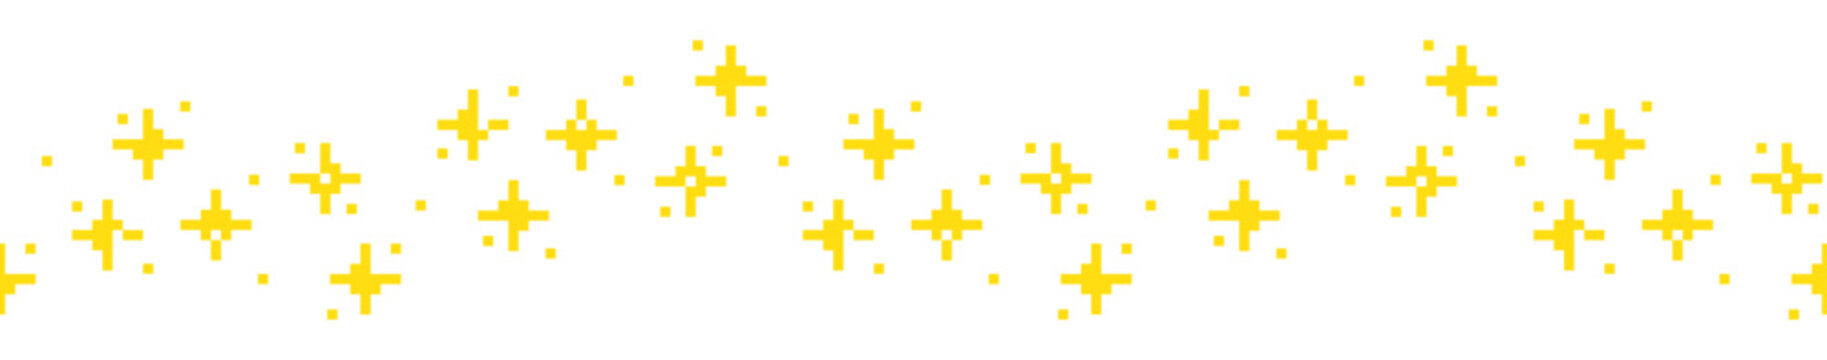 Pixel sparkling golden stars seamless border. 90s 8 bit game style glitter graphic element for branding, packaging, prints. Trendy modern retro vector illustration isolated on transparent background